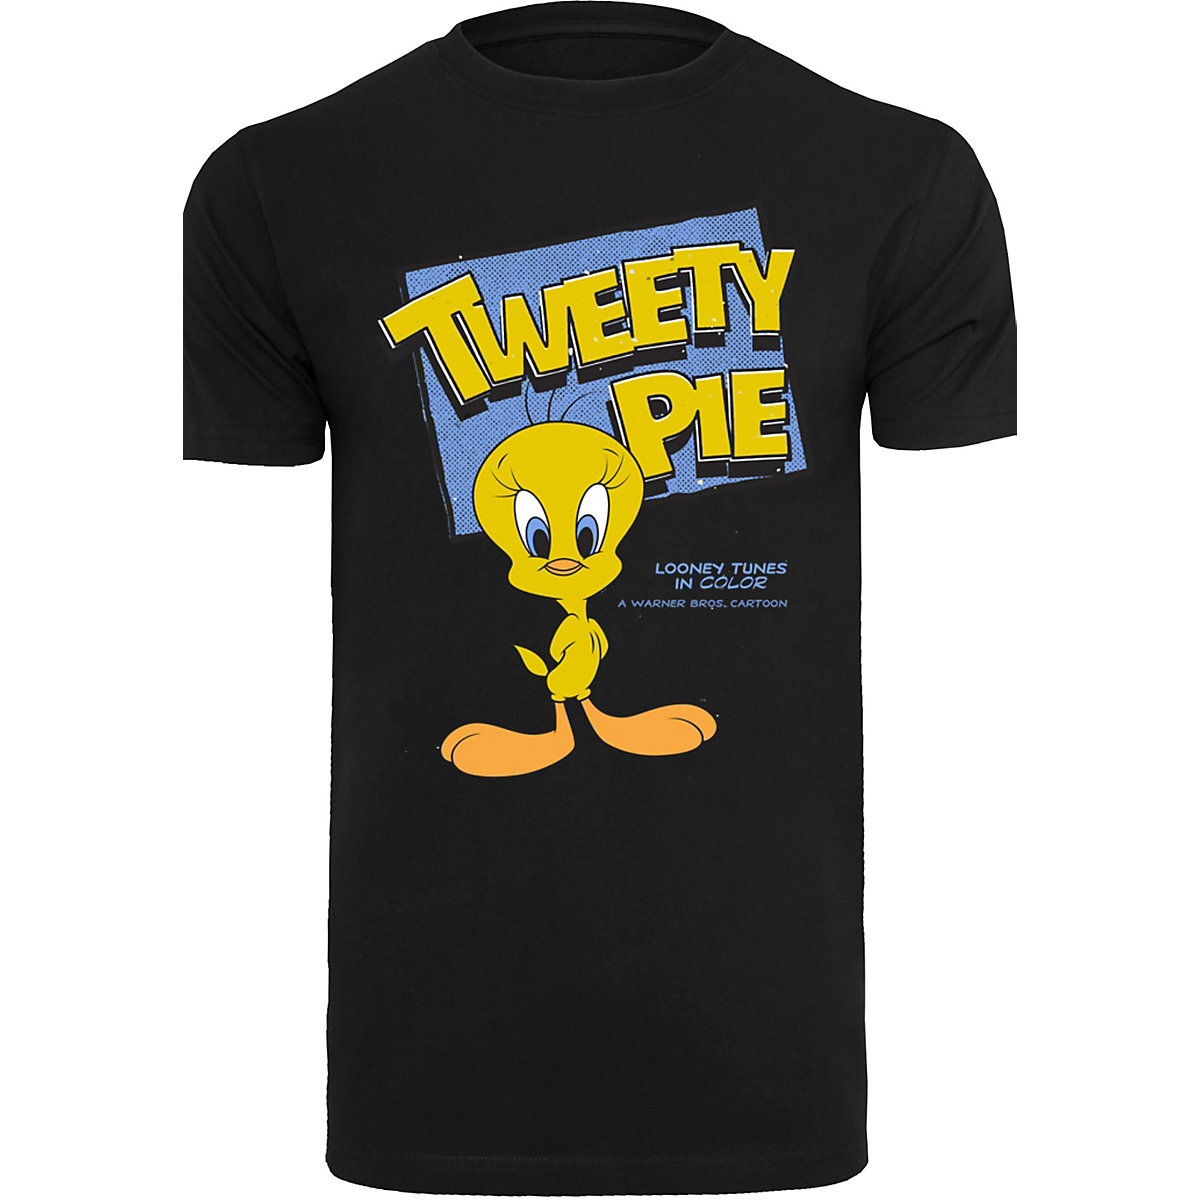 F4NT4STIC Looney Tunes Classic Tweety Pie T-Shirts schwarz